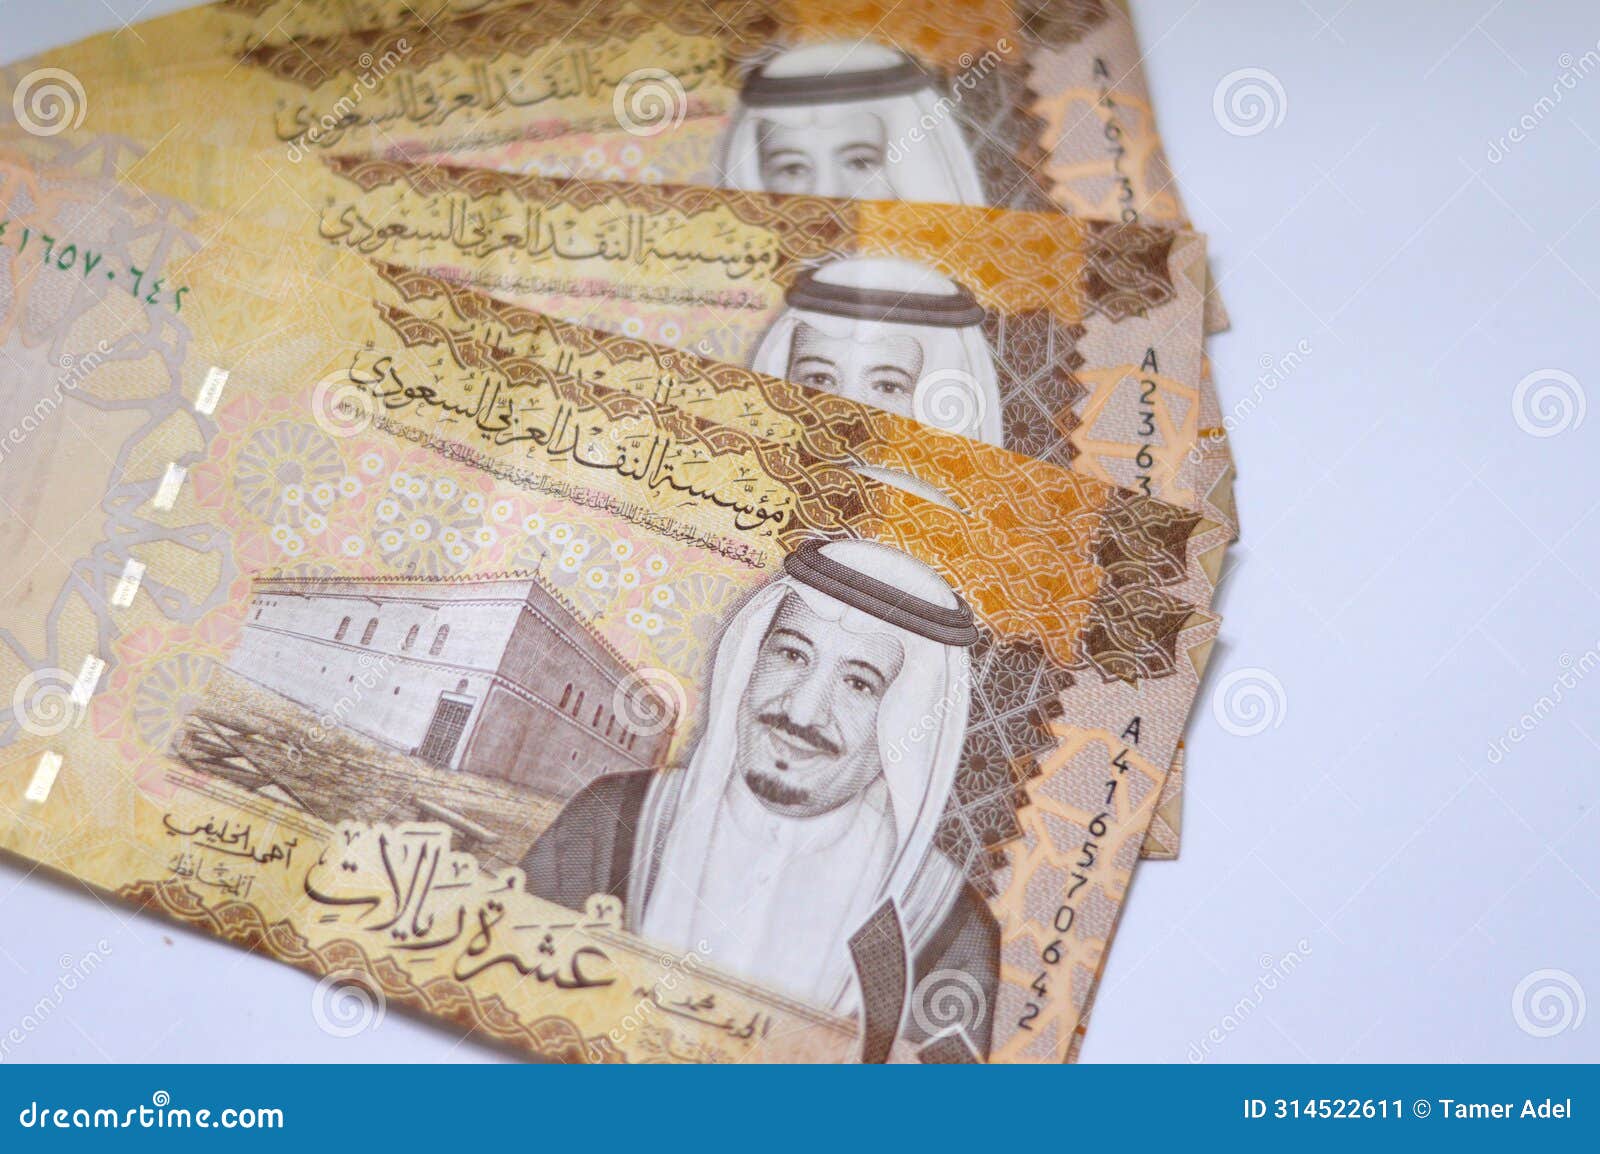 saudi arabia 10 sar ten saudi riyals cash money banknote with the photo of king abdullah bin abdulaziz al saud, murabba palace and